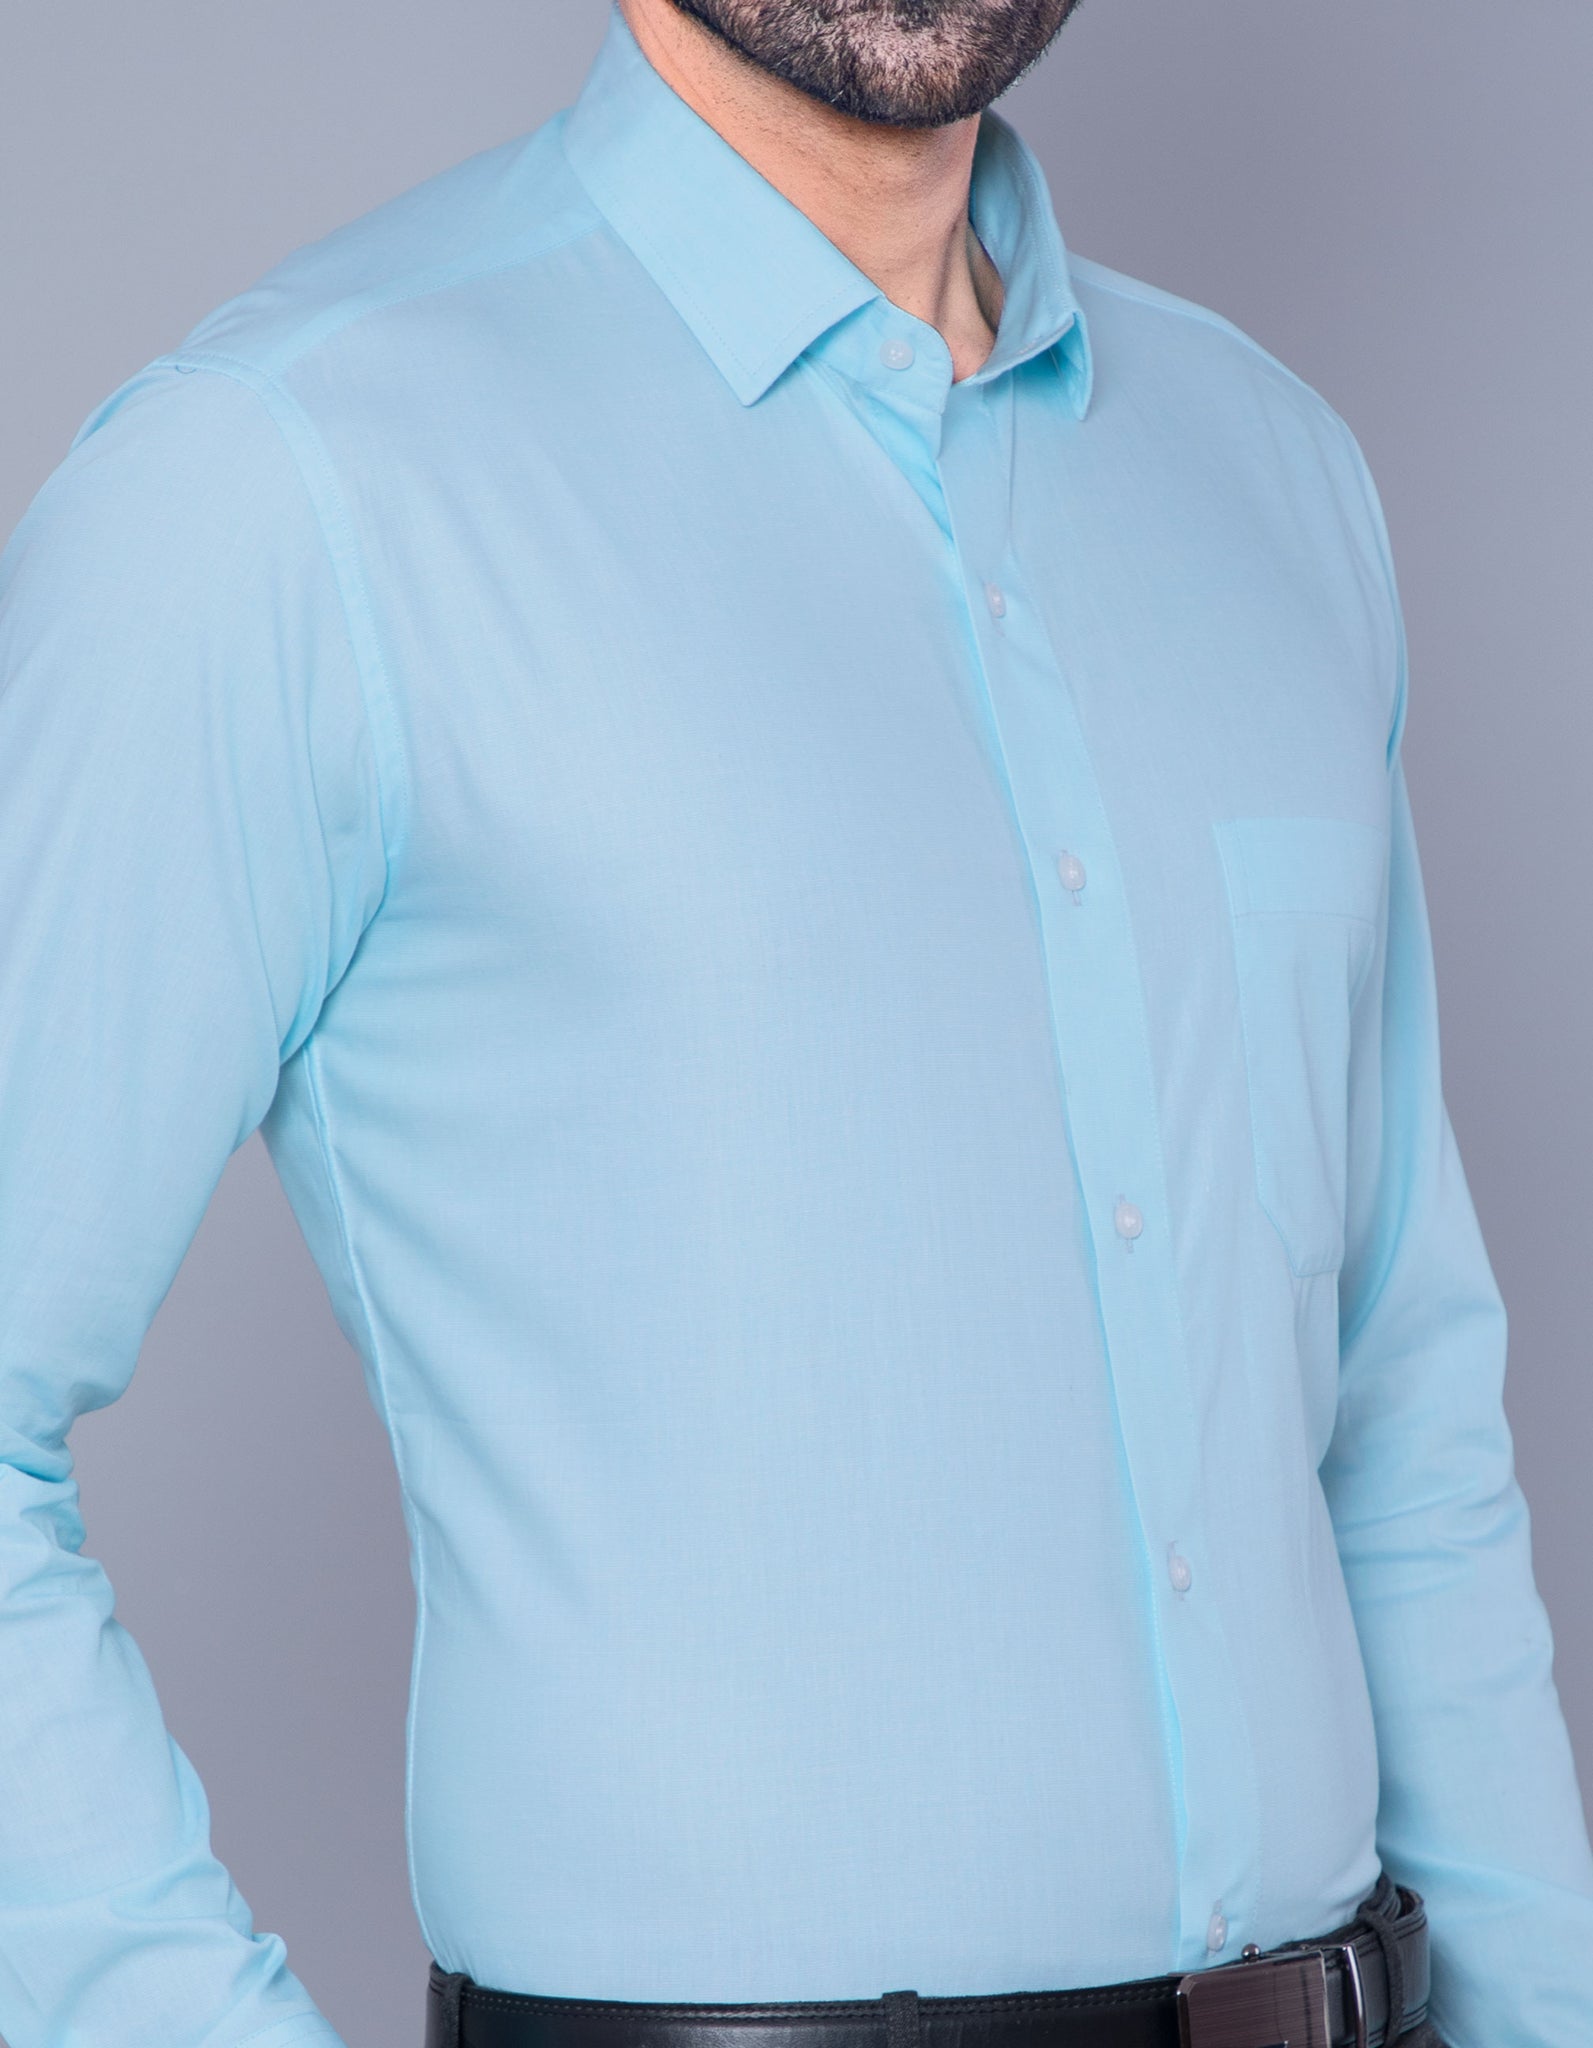 Aqua blue plain cotton office wear shirt